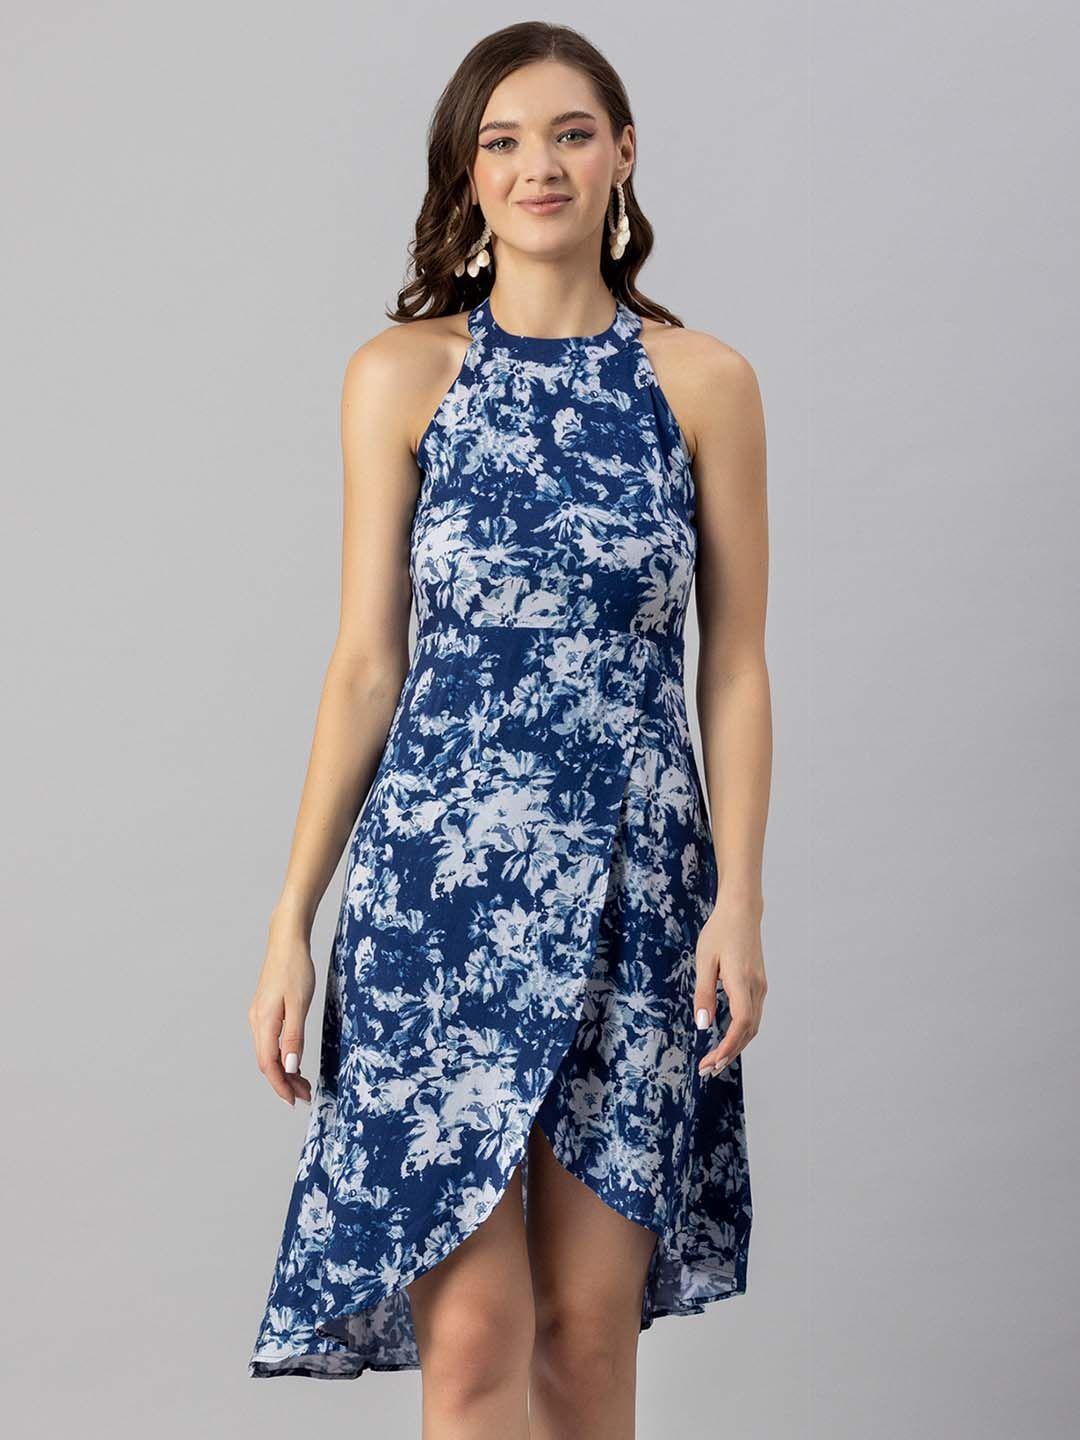 moomaya navy blue floral print sheath dress